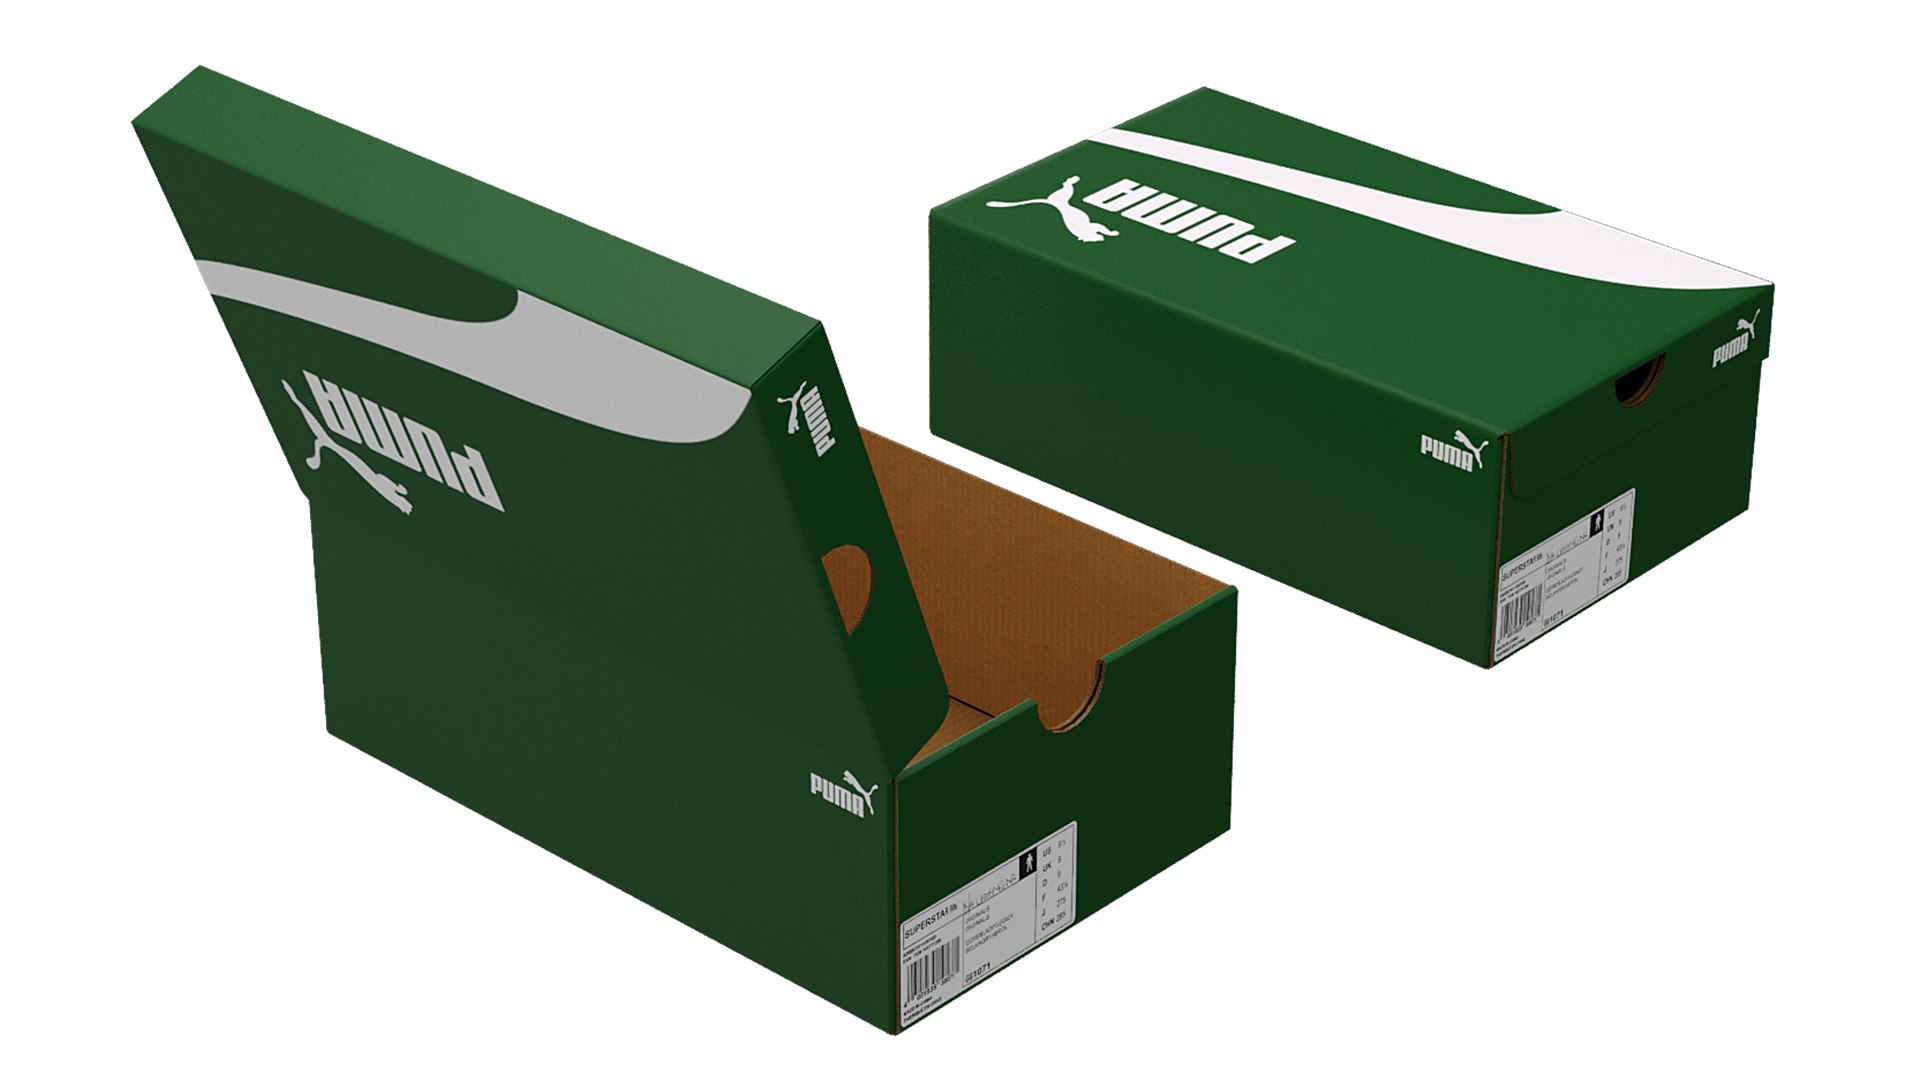 Nike Shoe Box Black - 3D Model by murtazaboyraz